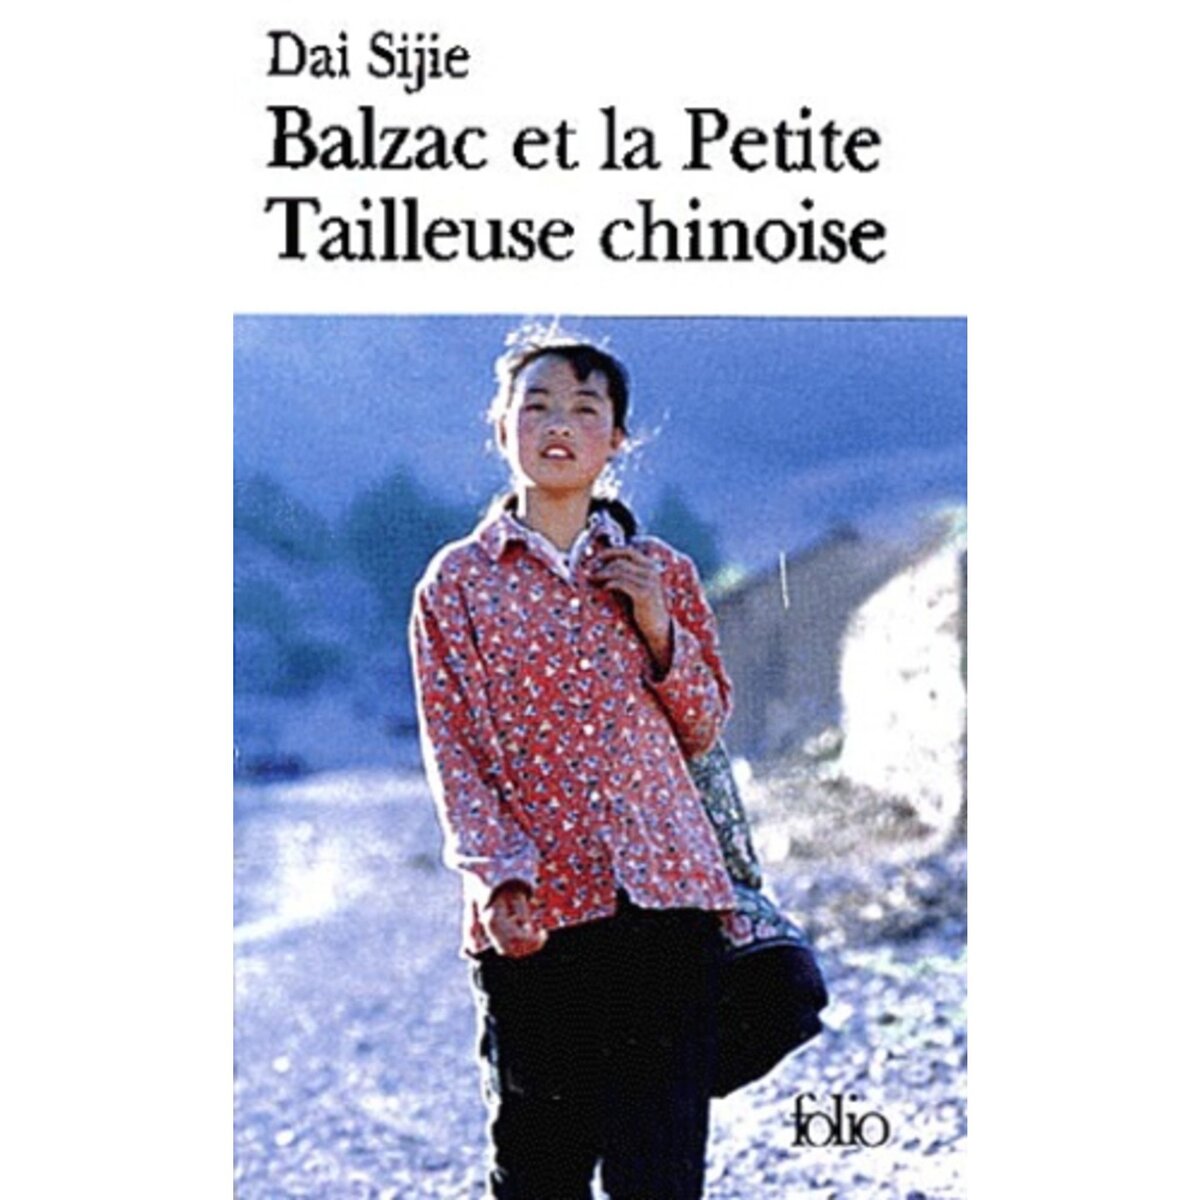  BALZAC ET LA PETITE TAILLEUSE CHINOISE, Dai Sijie